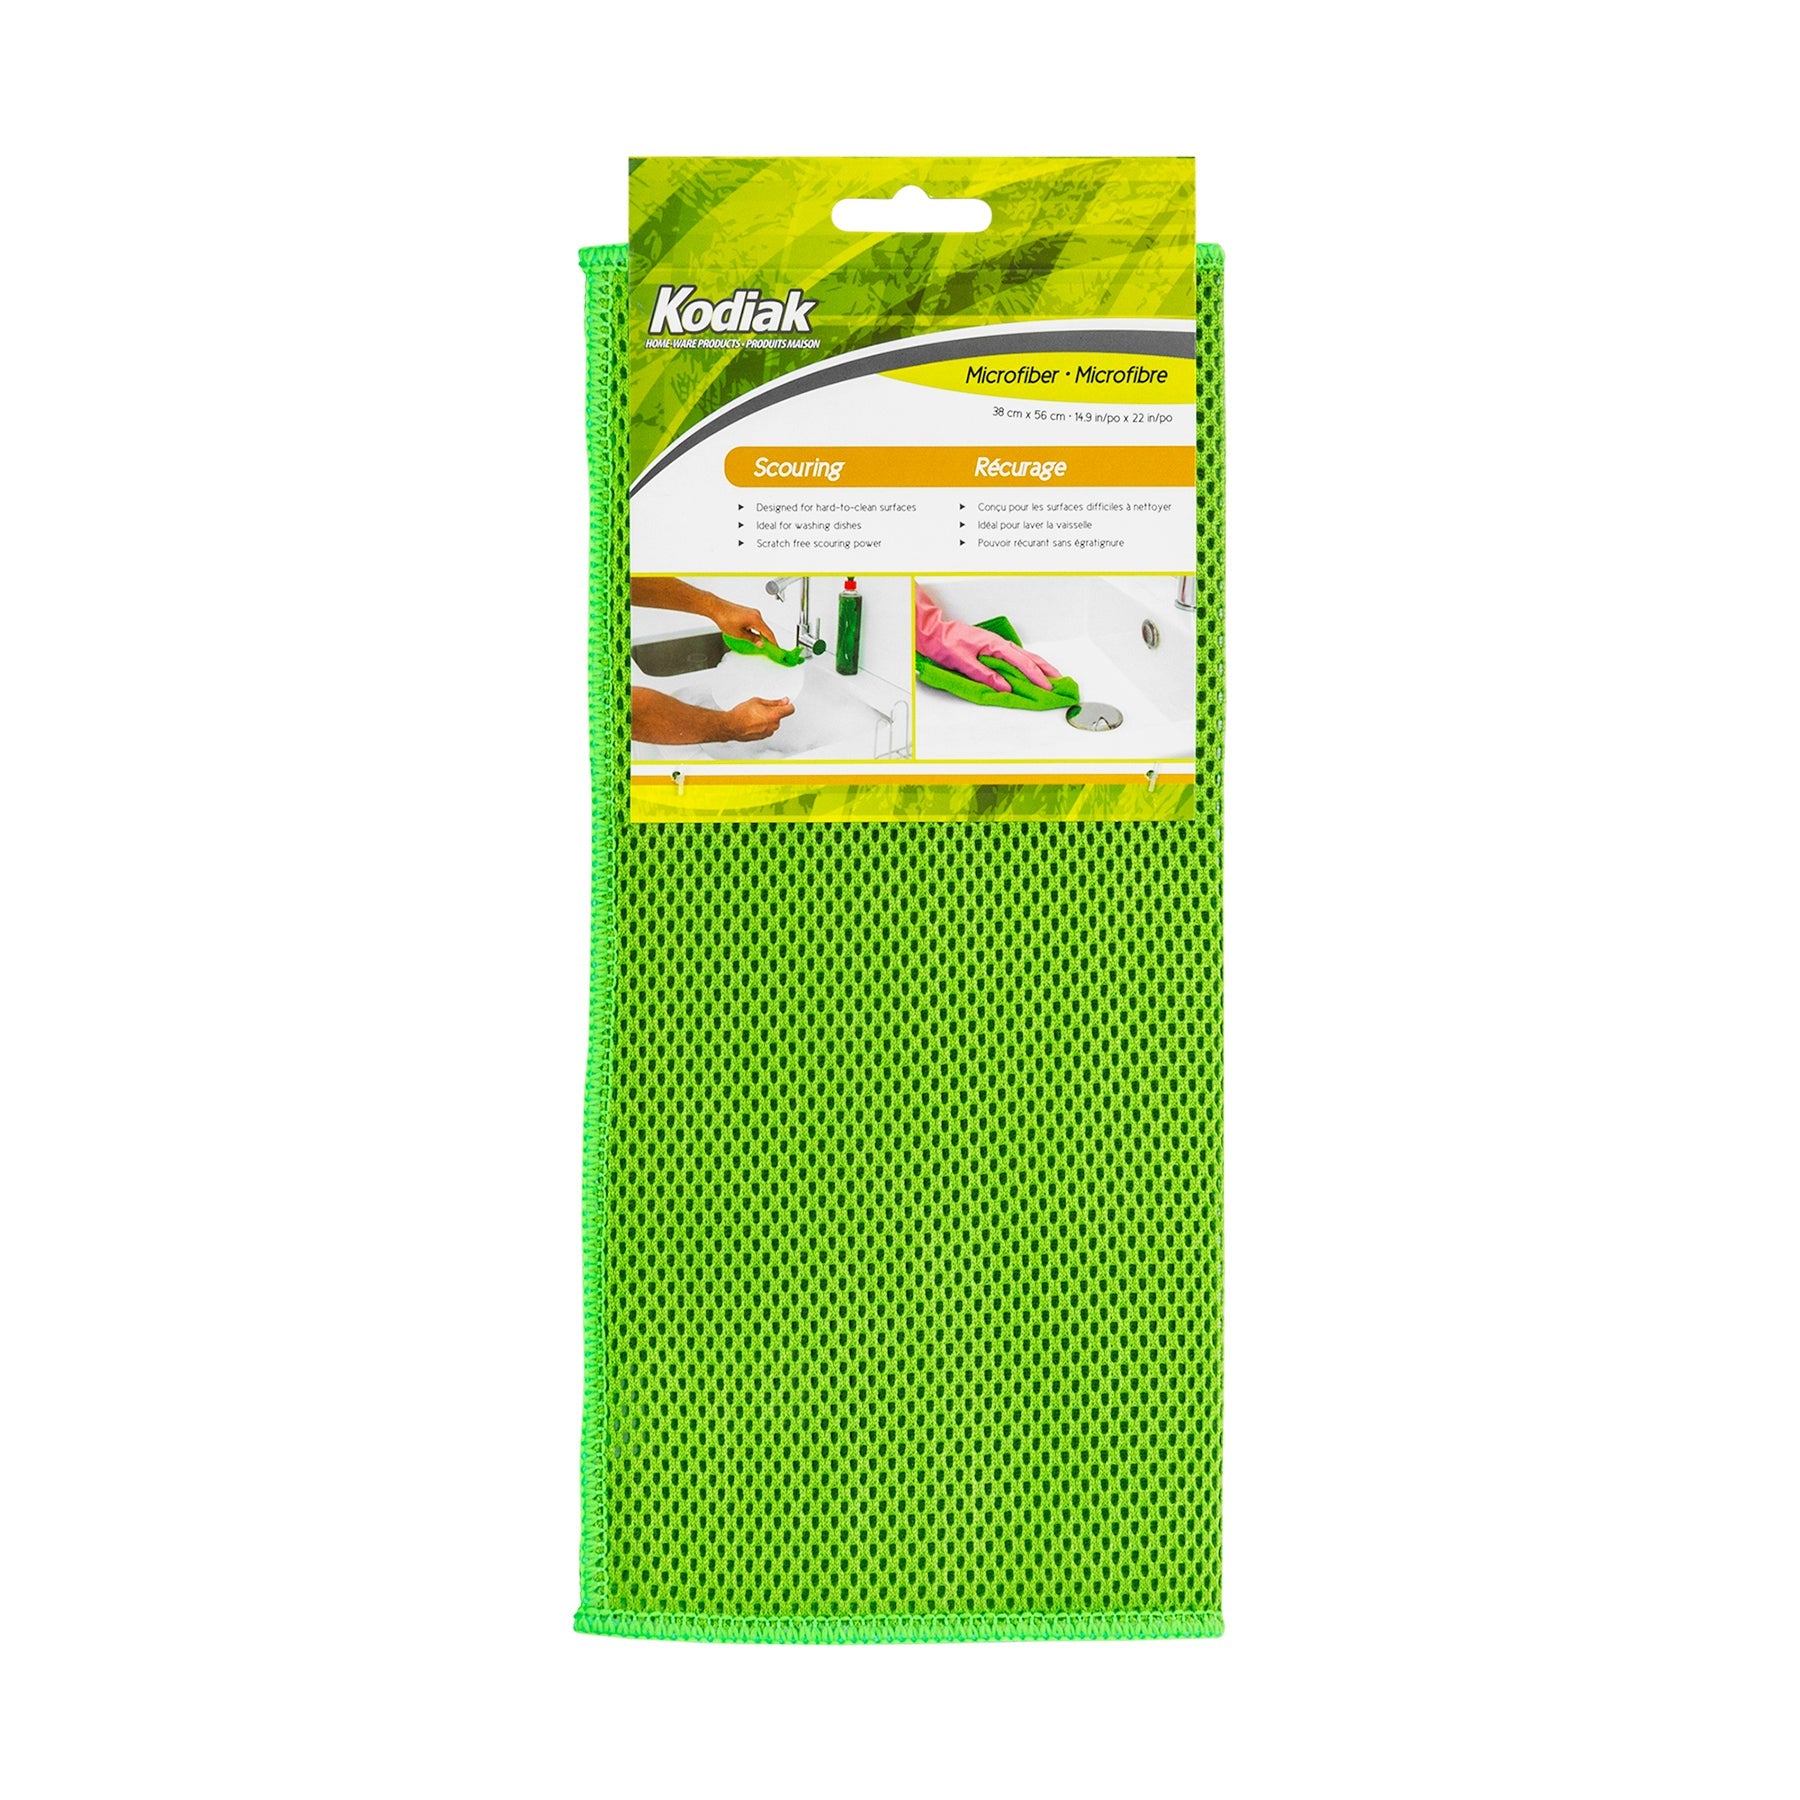 Kodiak Microfiber Scouring Cloth with Mesh Green 11.8x11.8in